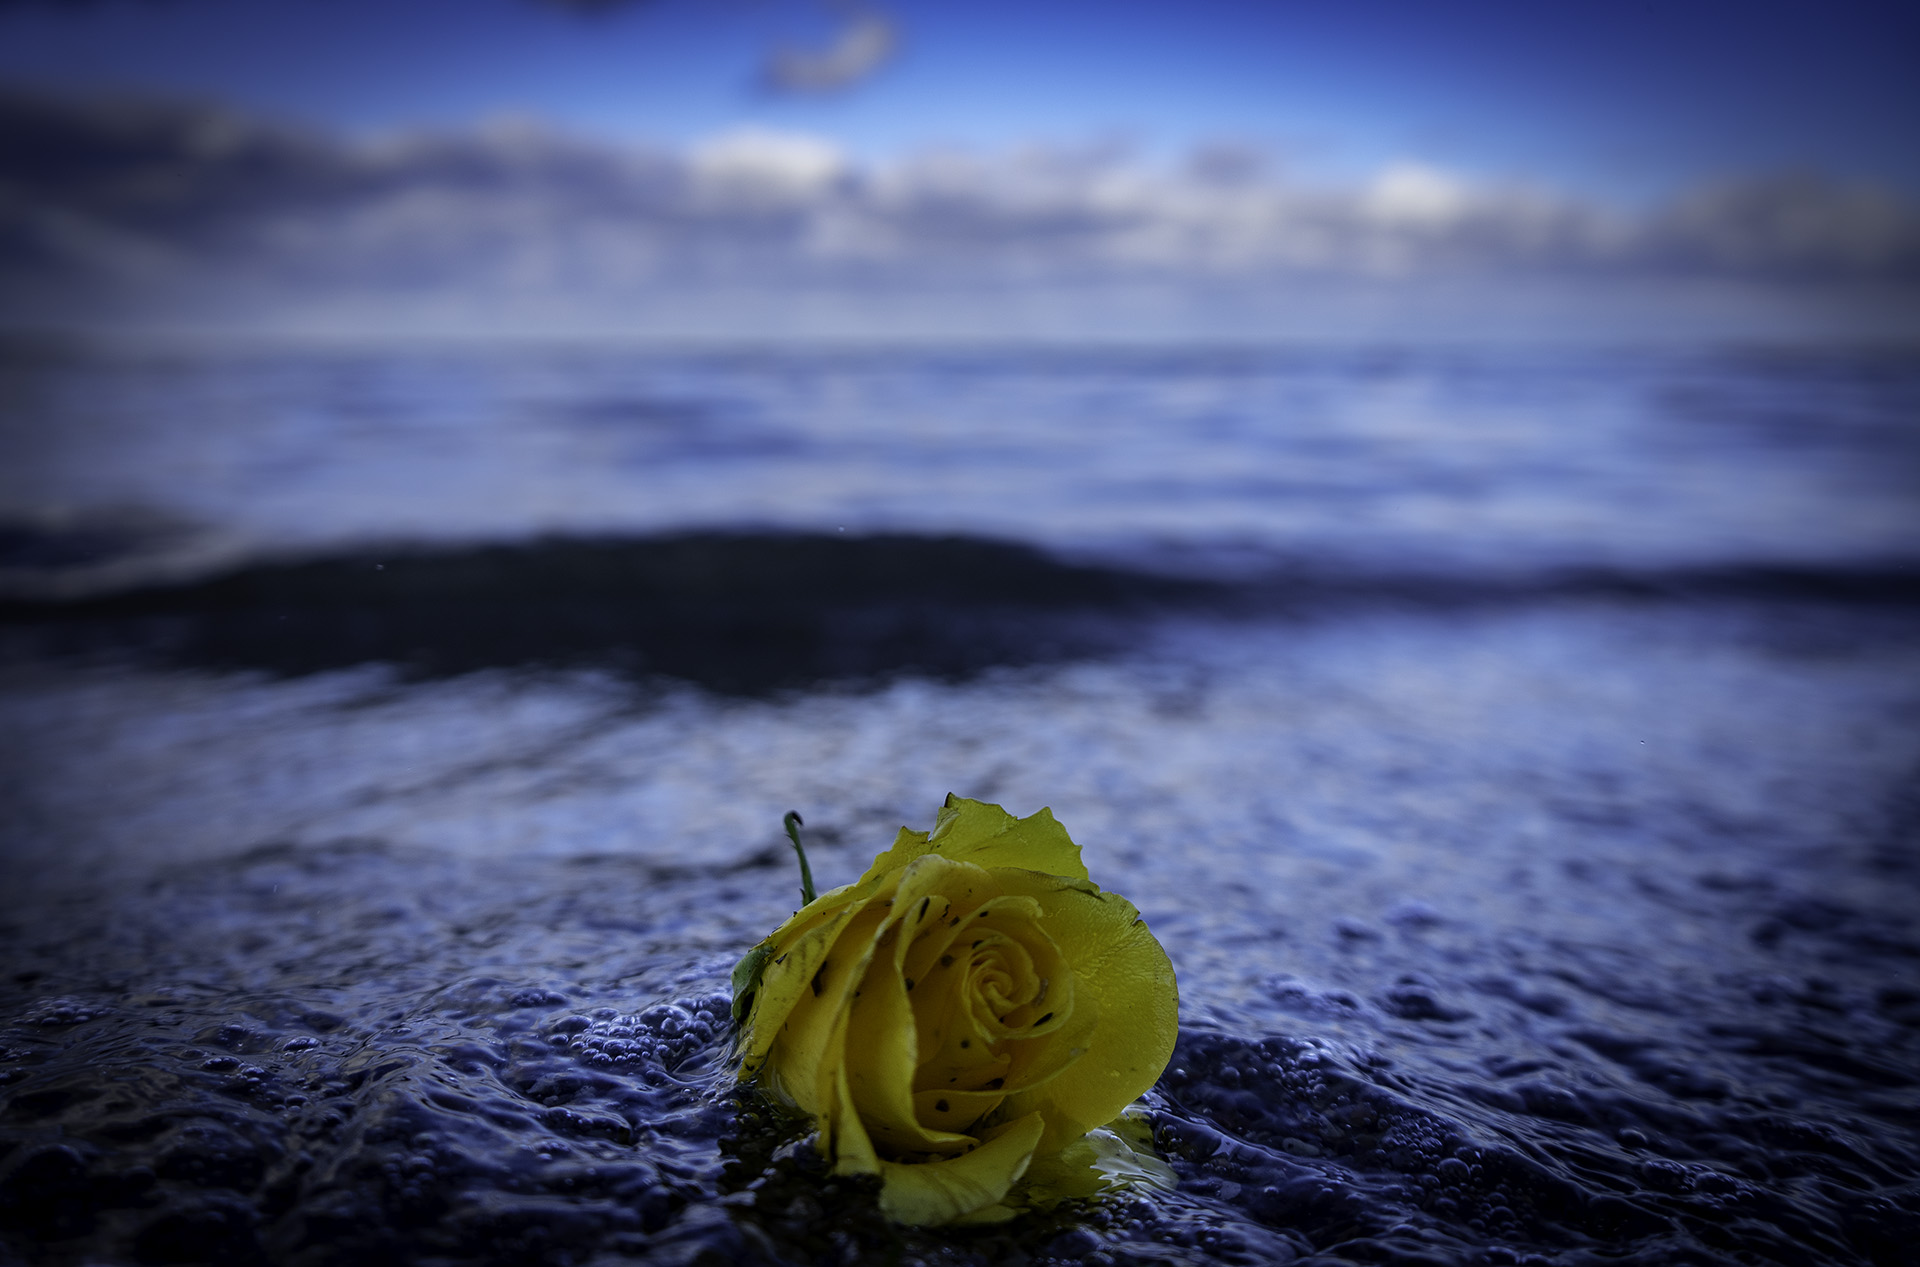 Seebestattung Rose, Copyright Stephan Siemon